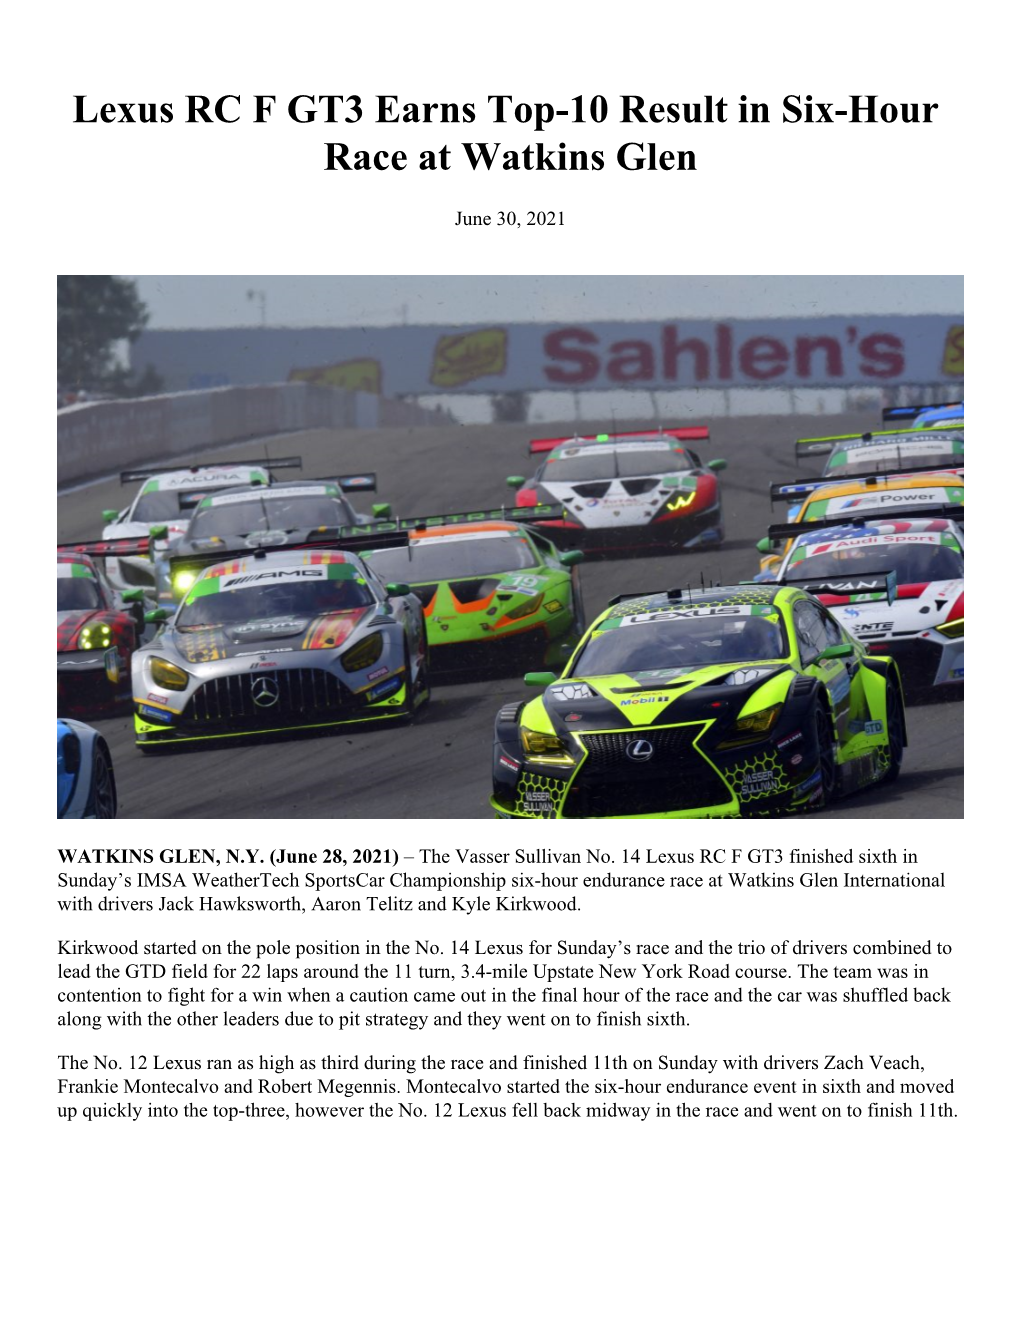 Lexus RC F GT3 Earns Top-10 Result in Six-Hour Race at Watkins Glen